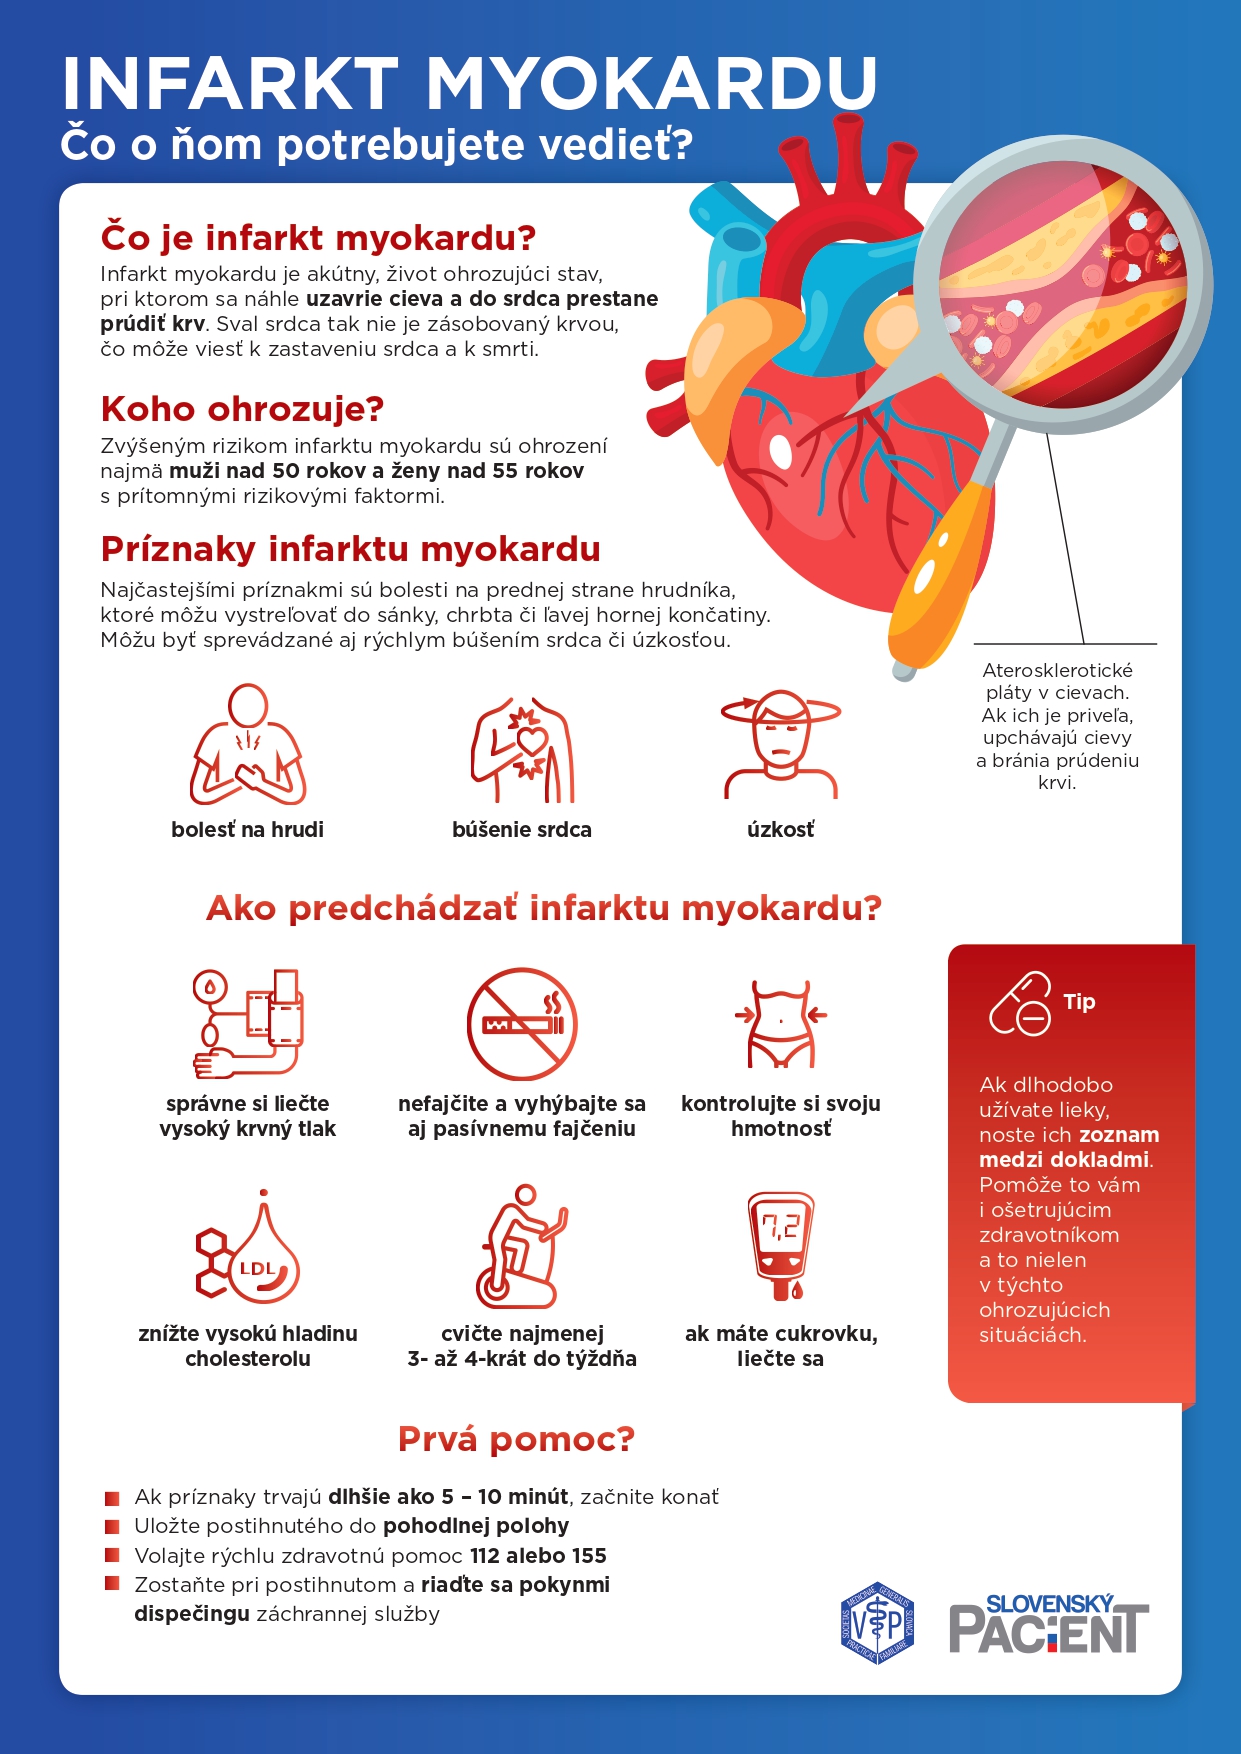 vysoký krvný tlak prvá pomoc)